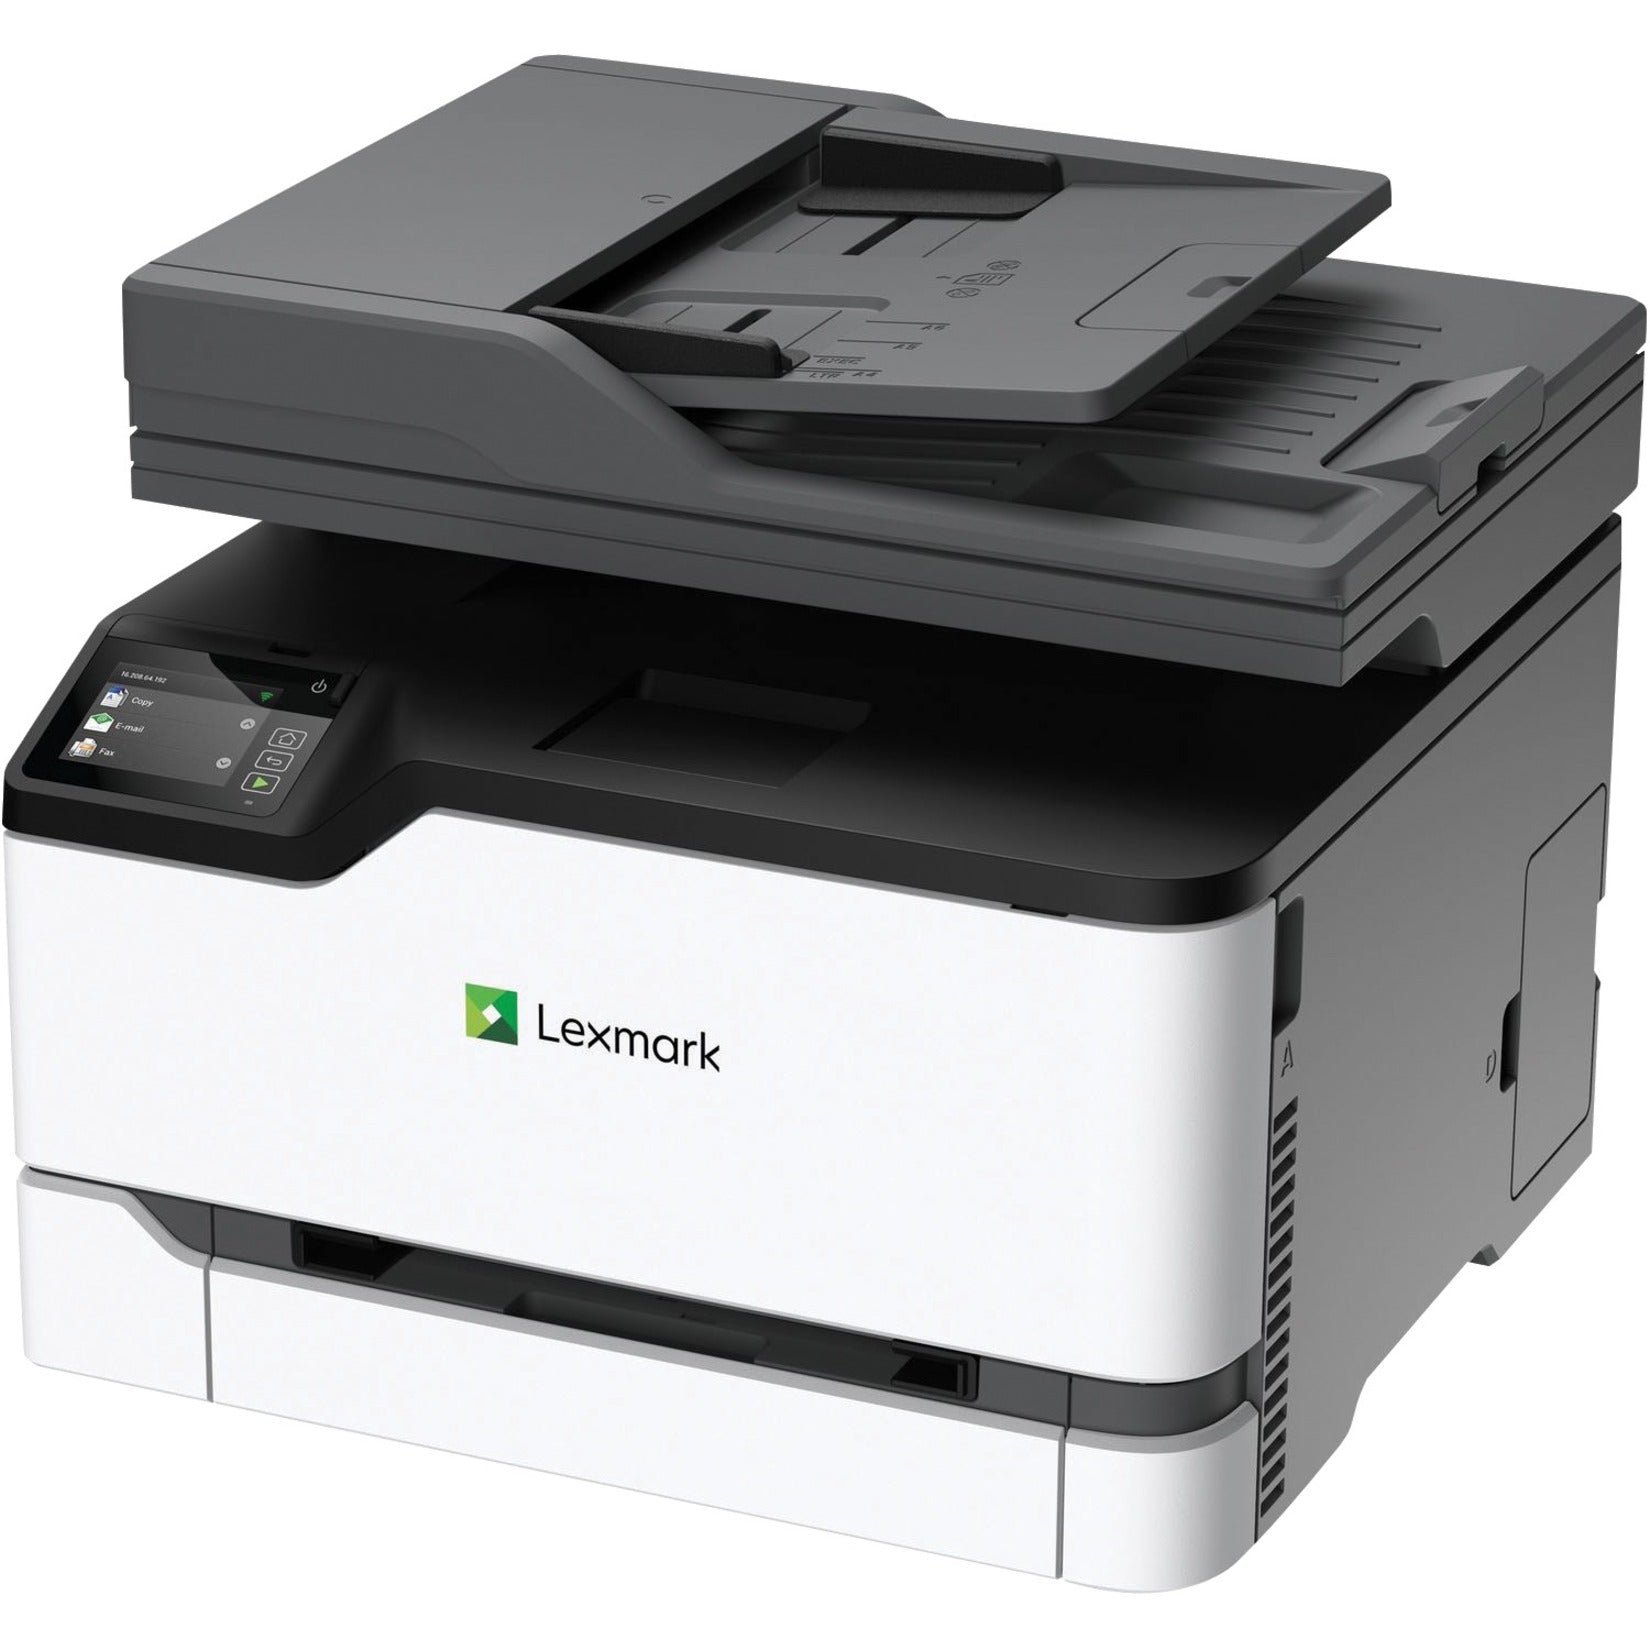 Lexmark 40N9660 MC3326i Color Laser Multifunction Printer, Wireless, Duplex Printing, 26 ppm, 600 x 600 dpi